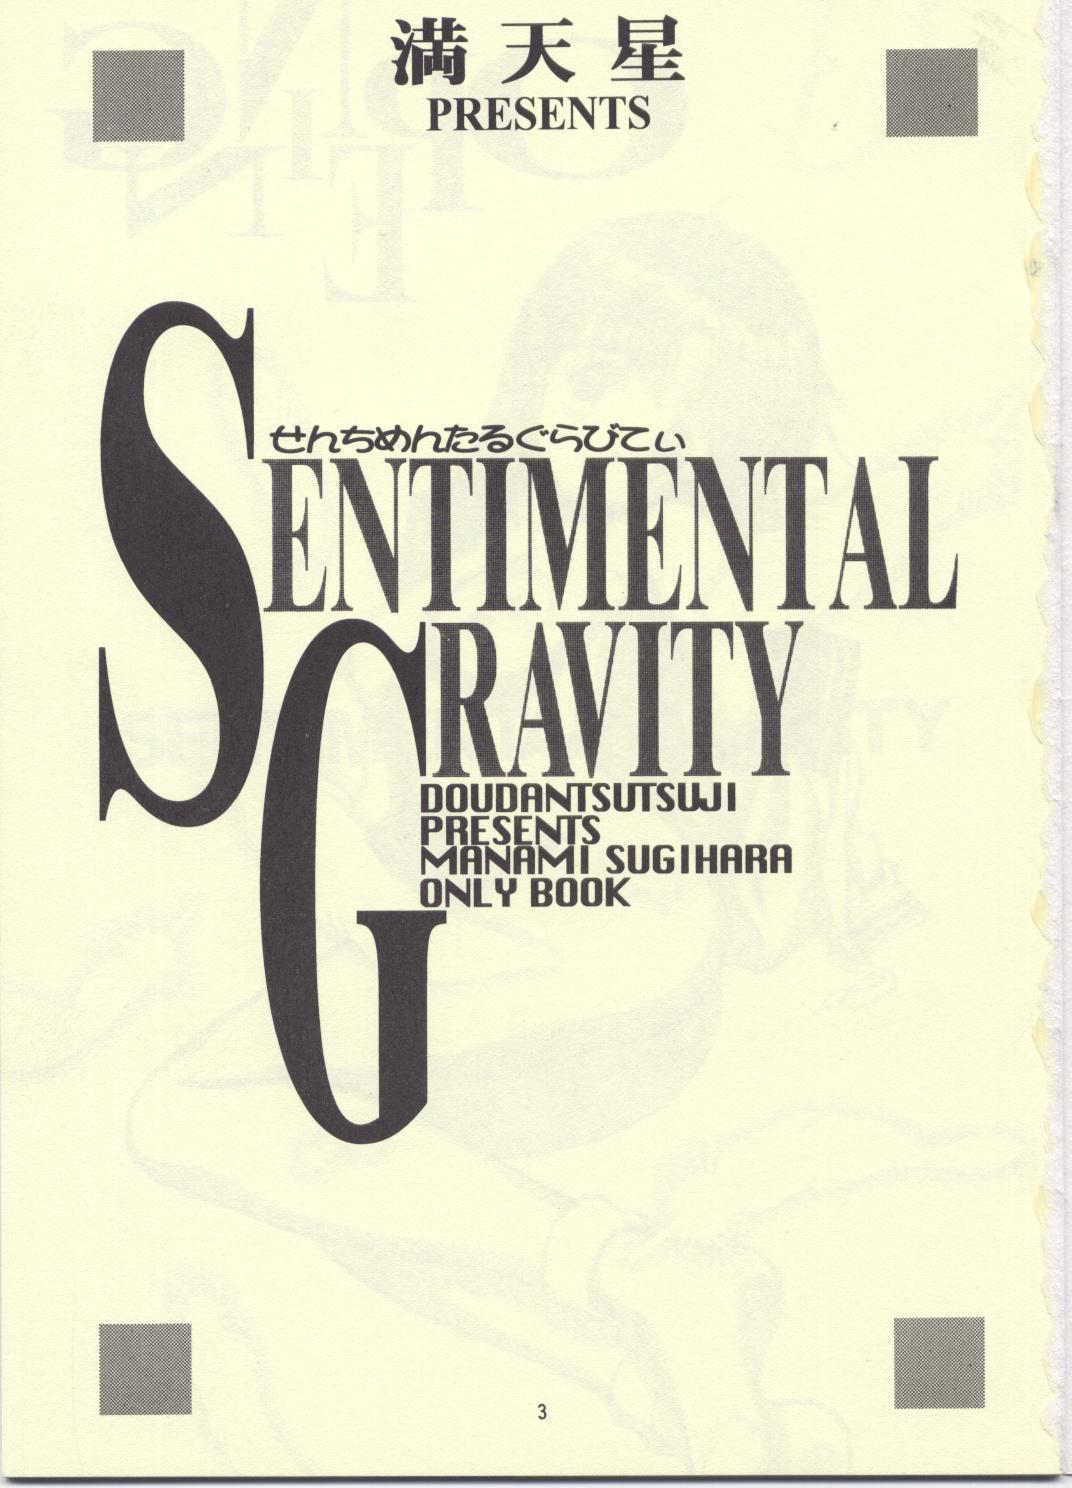 Throat Sentimental Gravity - Sentimental graffiti Sexcam - Page 2